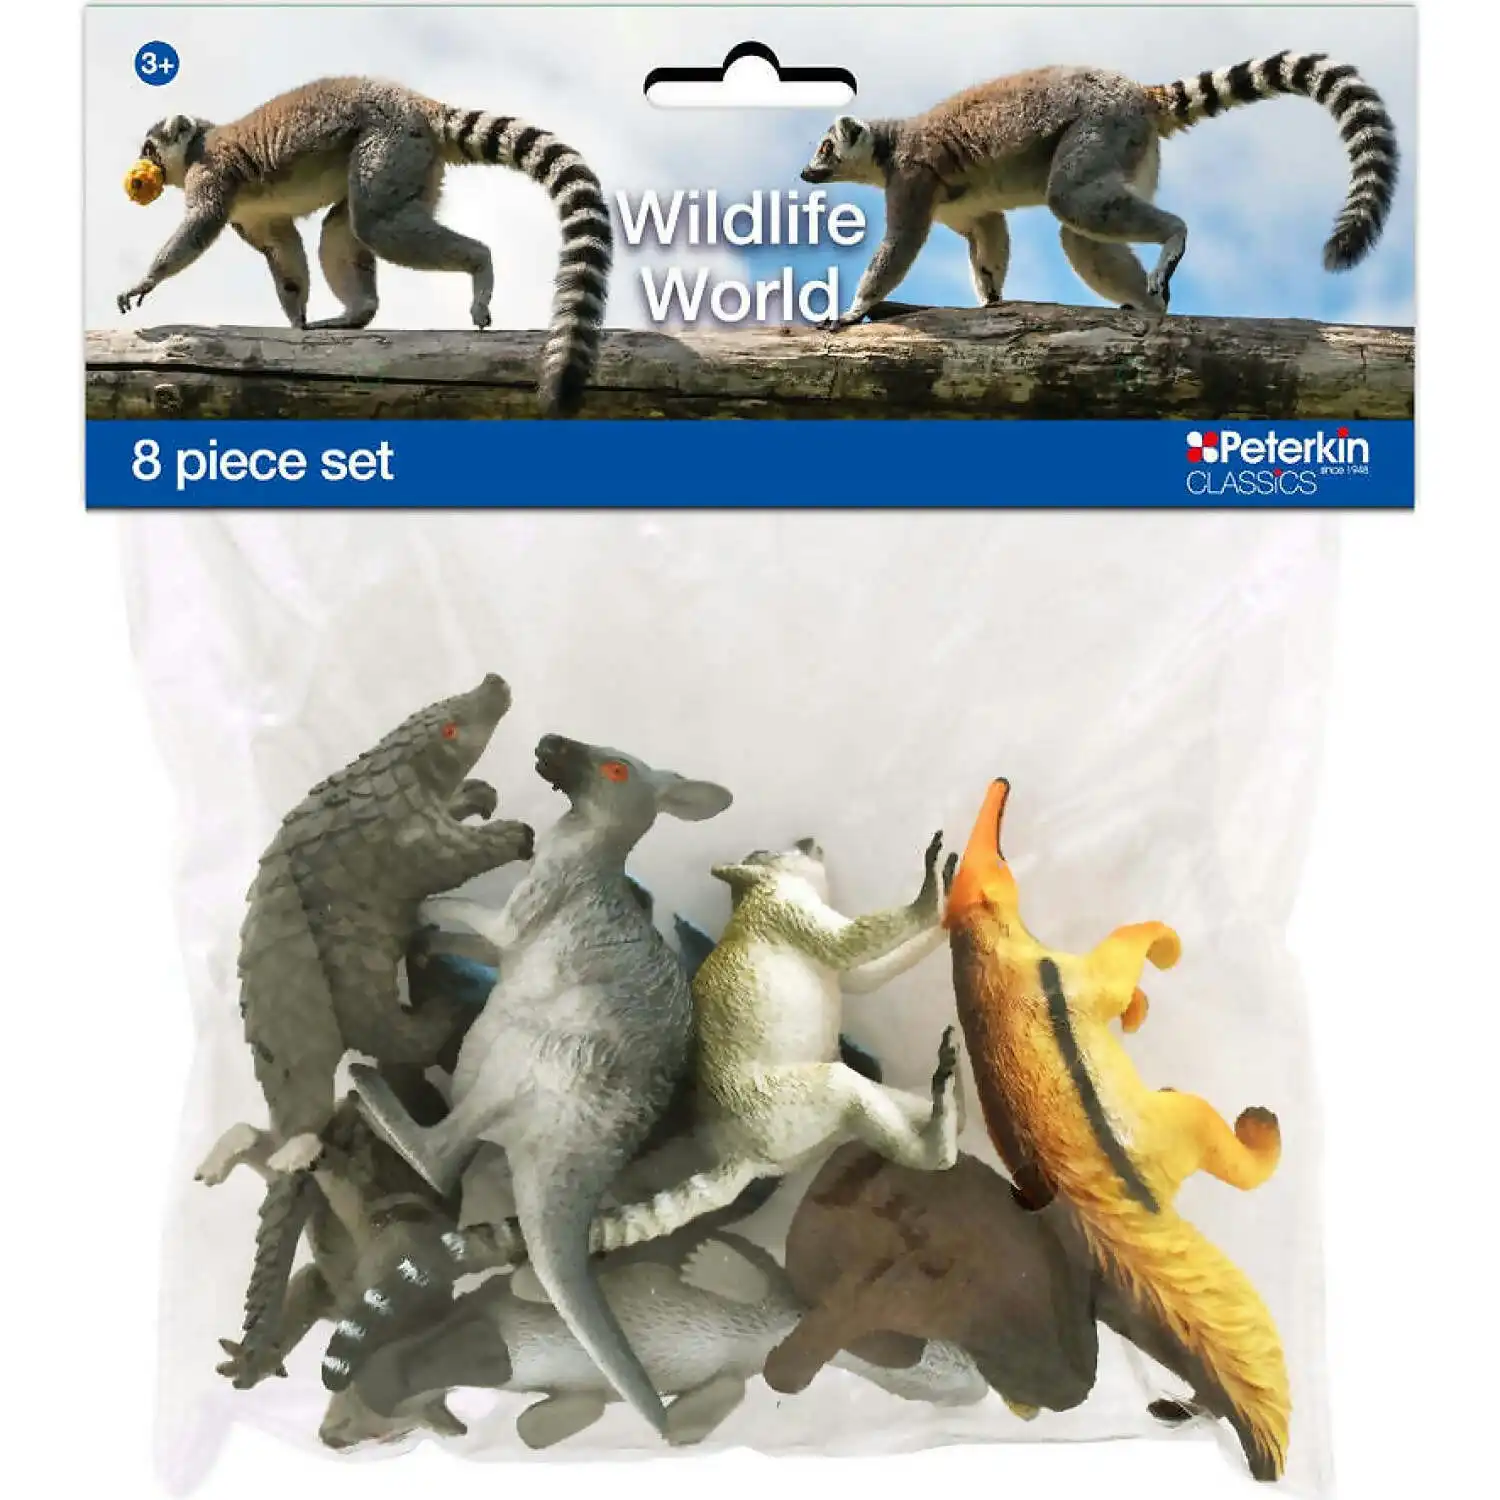 Peterkin - Classics Wildlife World 8 Piece Figure Set